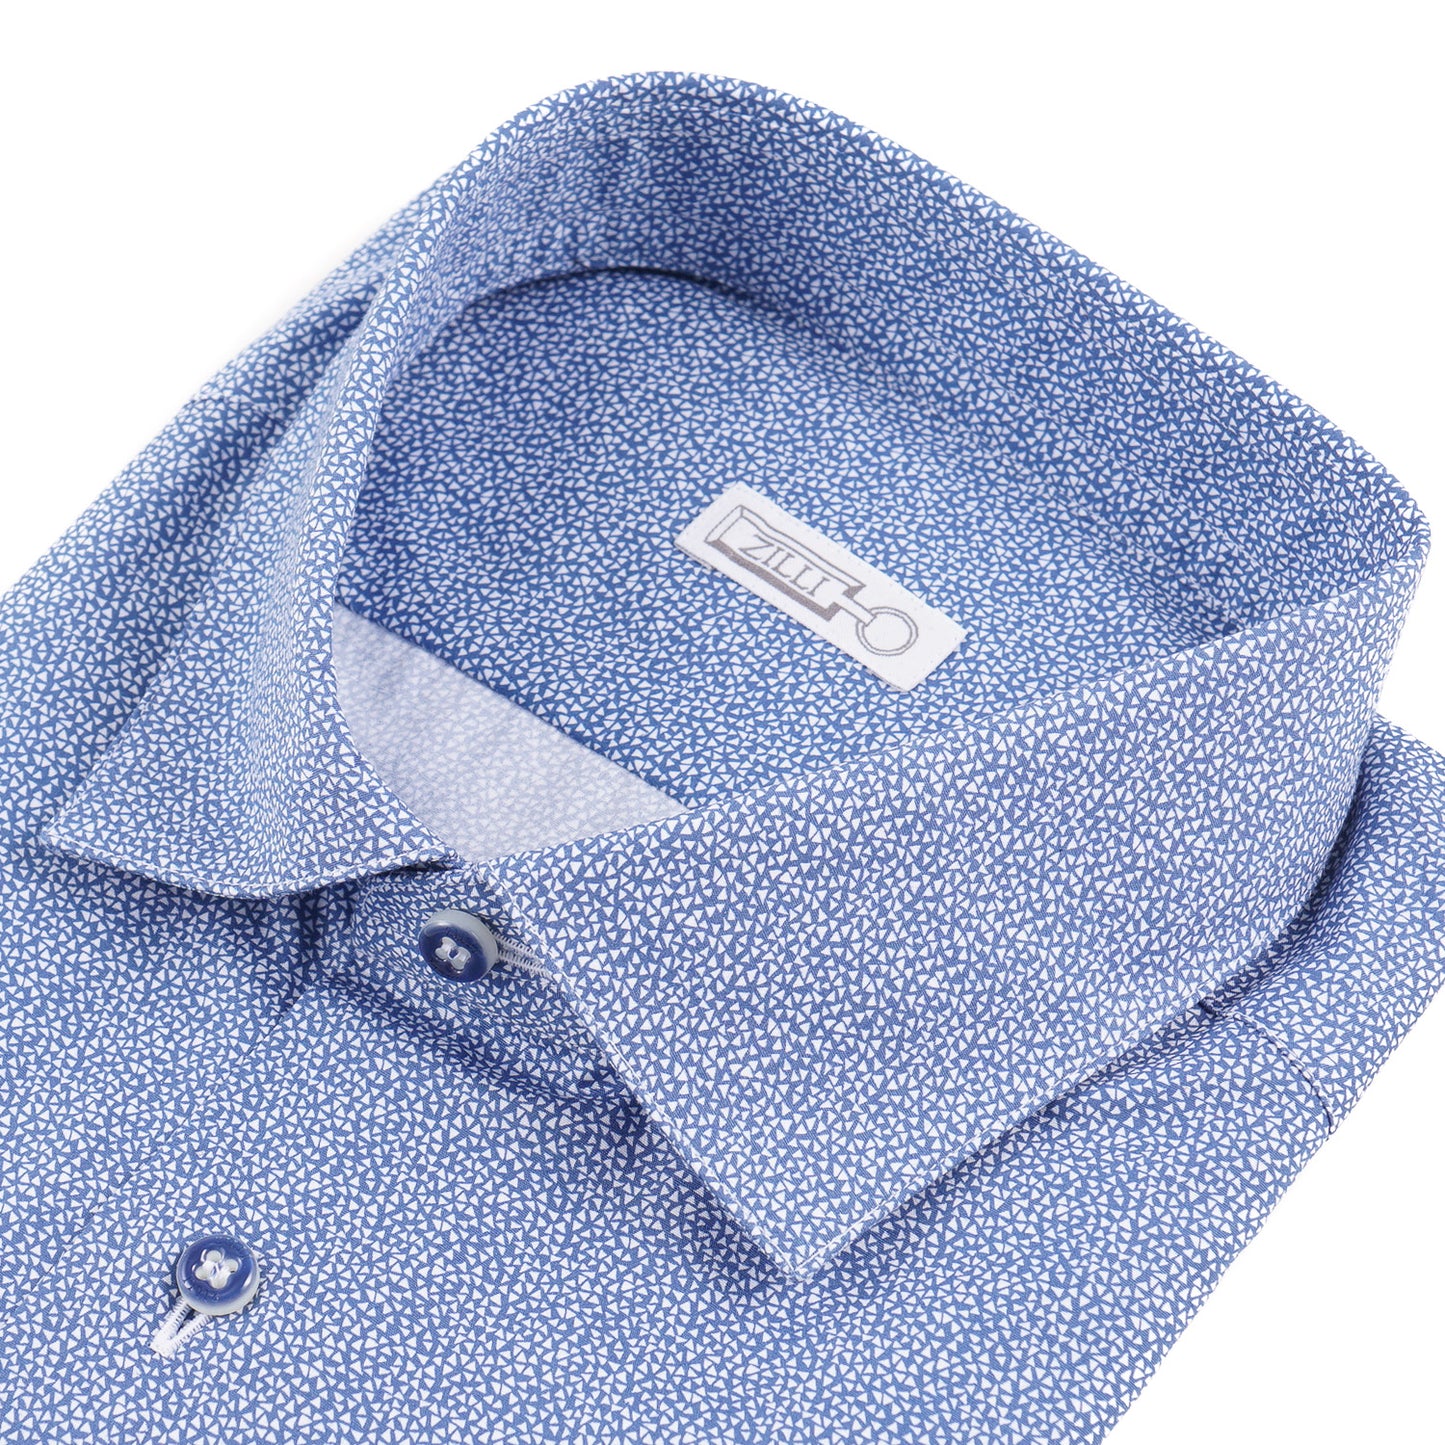 Zilli Tailored-Fit Shirt with Geometric Print - Top Shelf Apparel